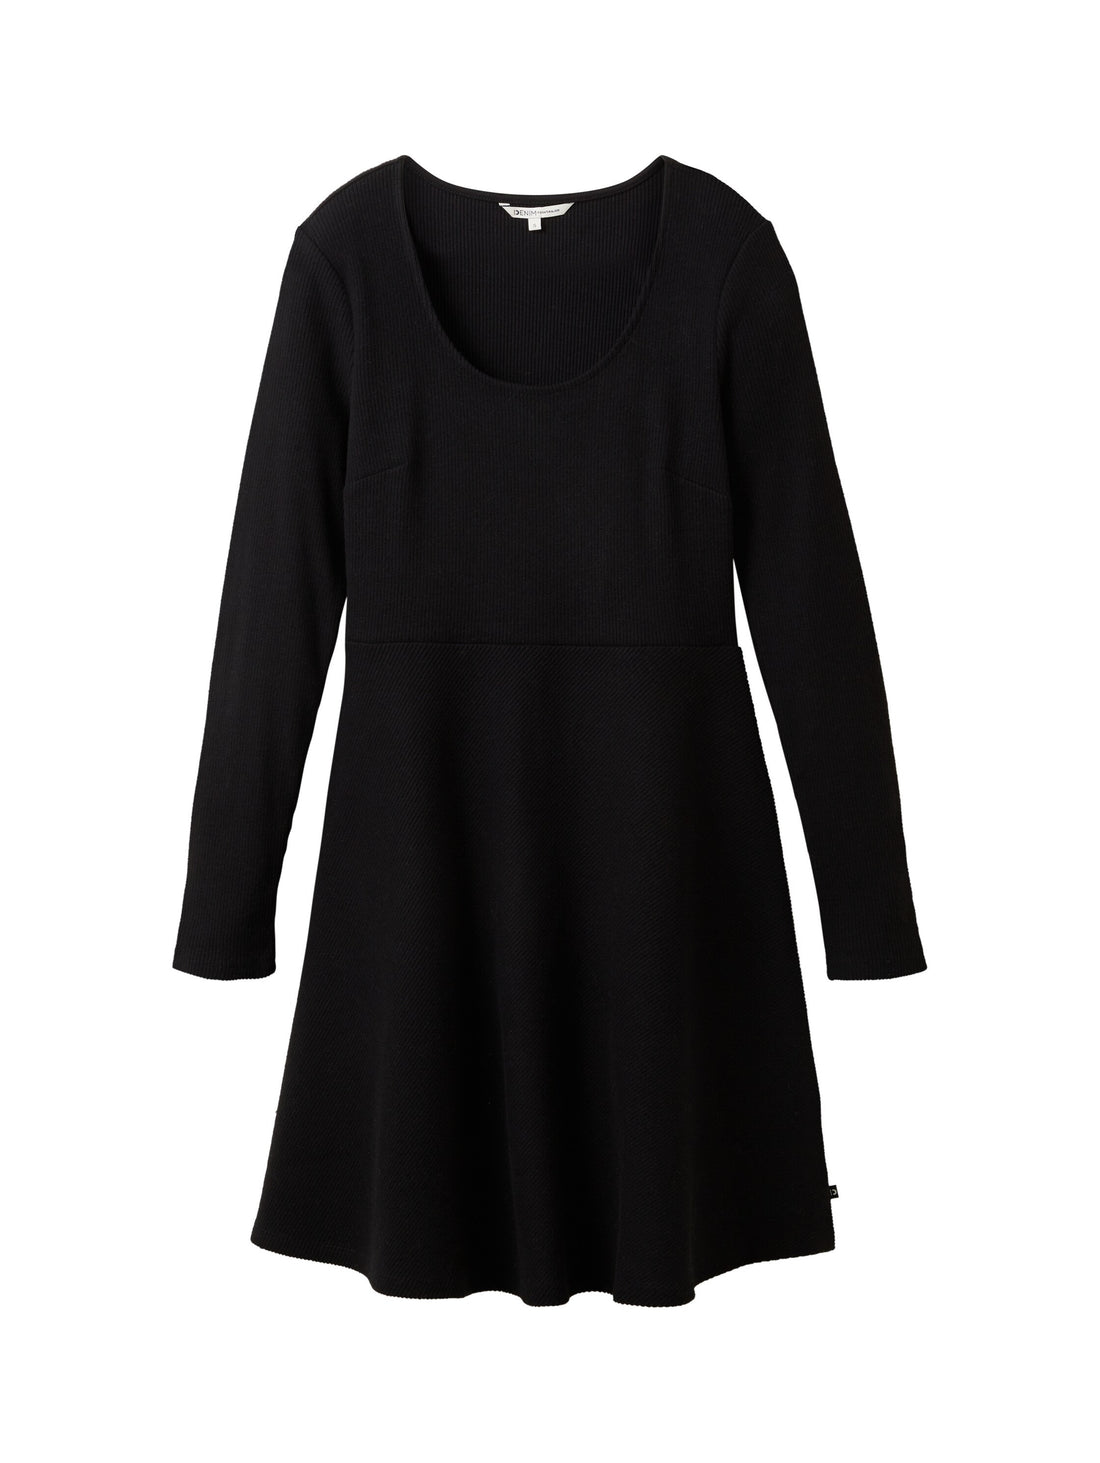 Long Sleeve Short Dress With Round Neckline_1038134_14482_01